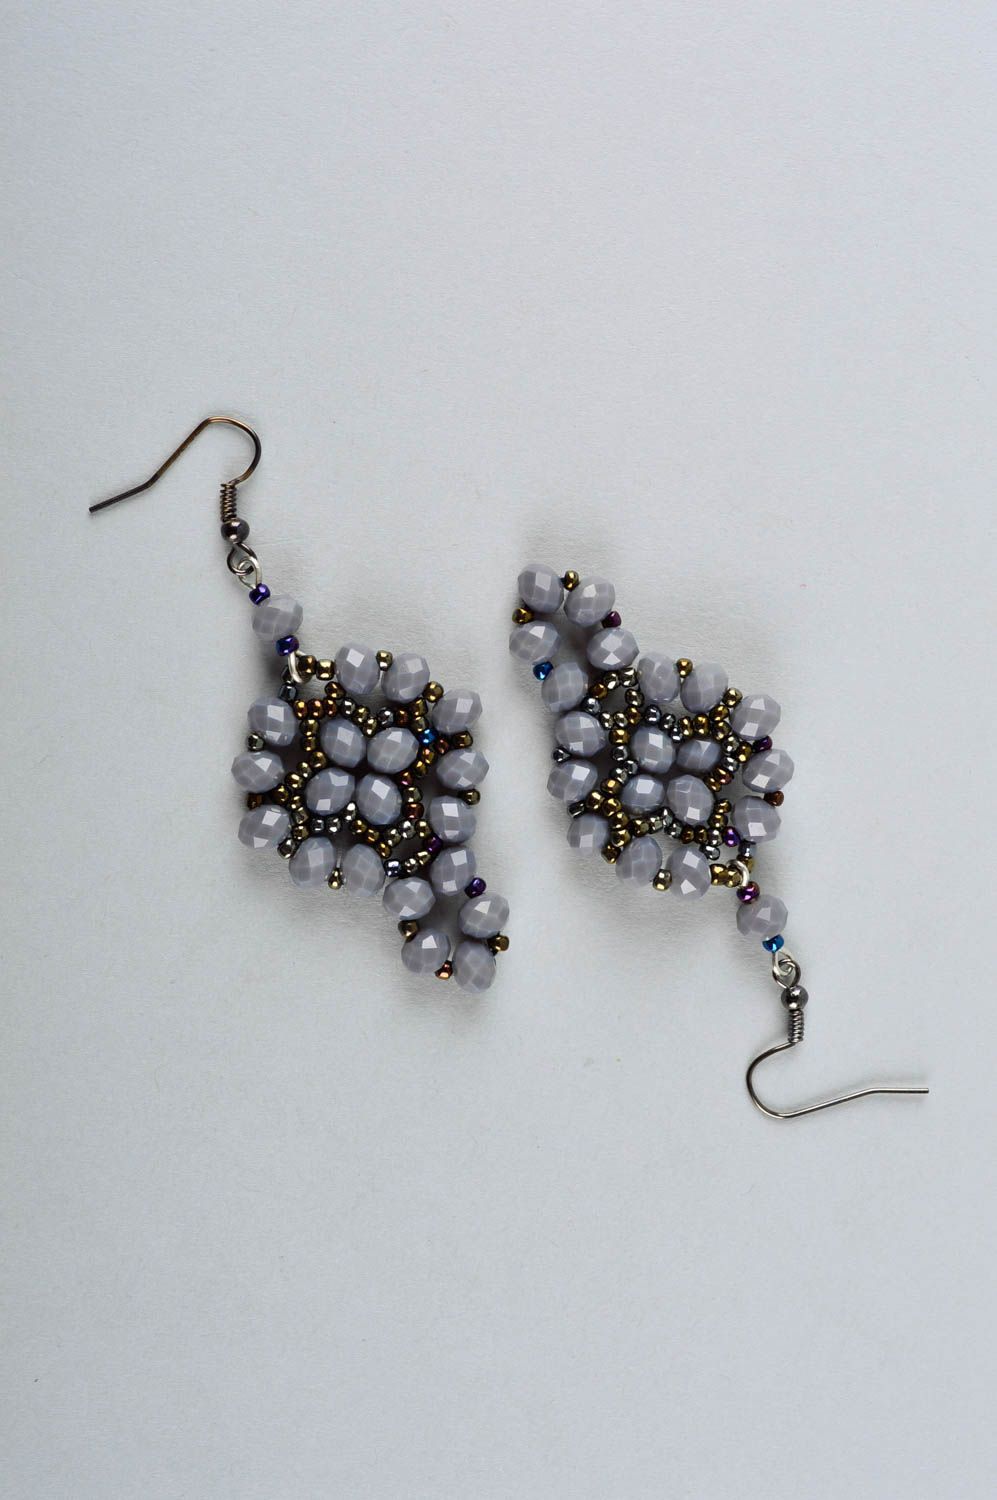 Handmade earrings bead earrings designer accessories fashion jewelry gift ideas photo 3